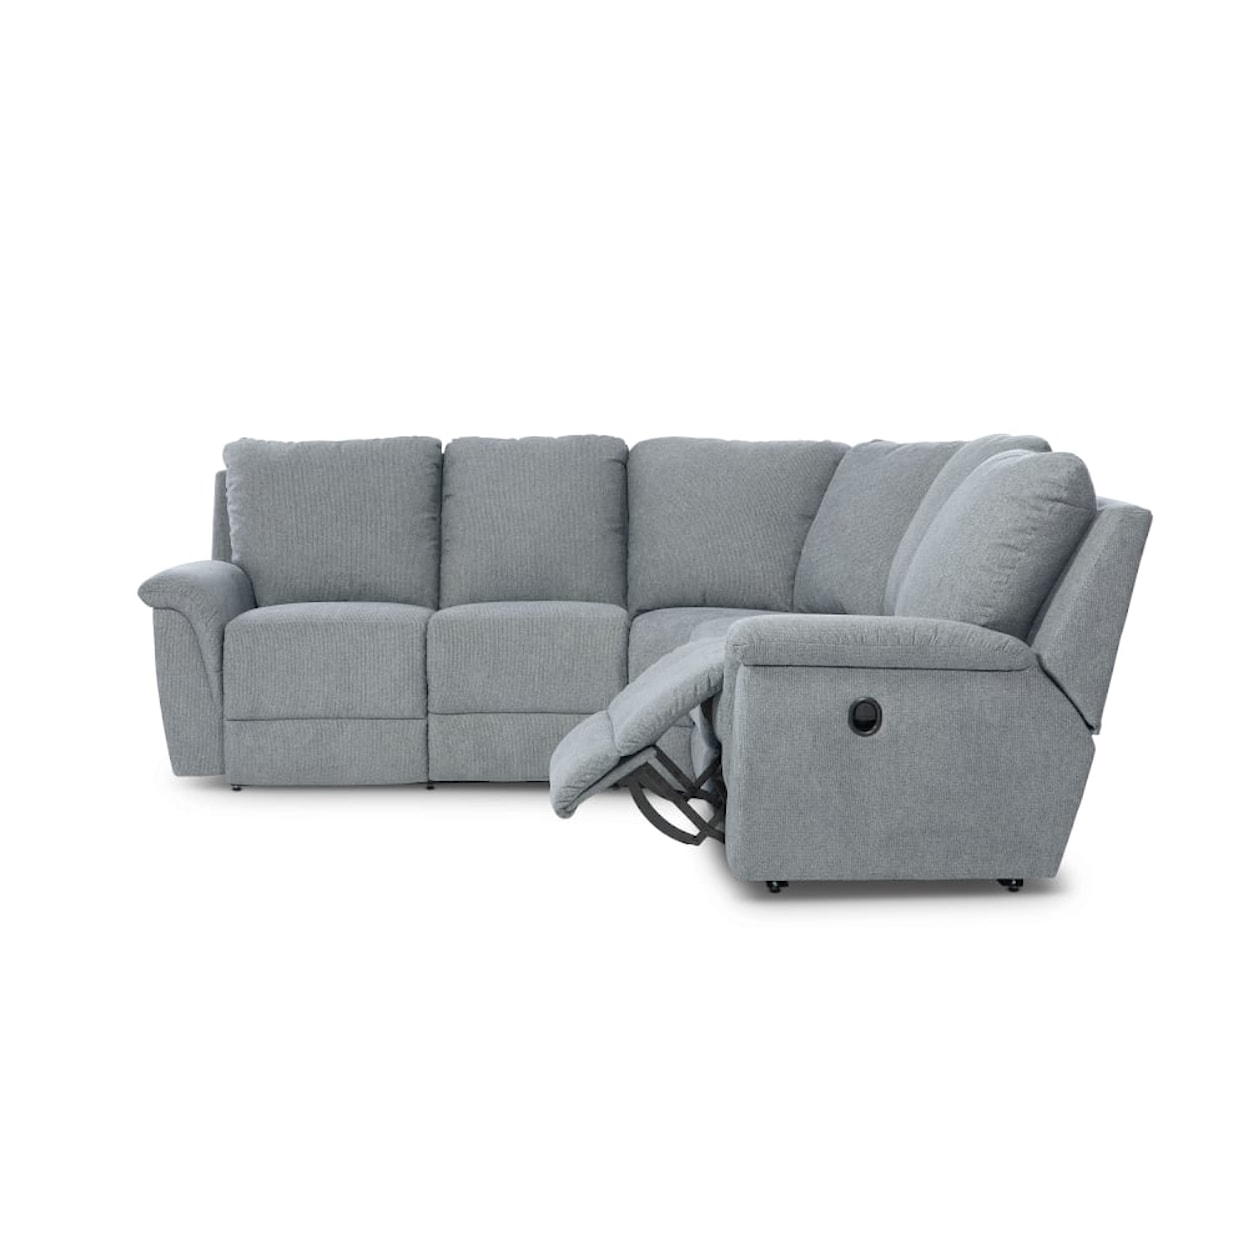 La-Z-Boy Rigby Reclining Sectional Sofa